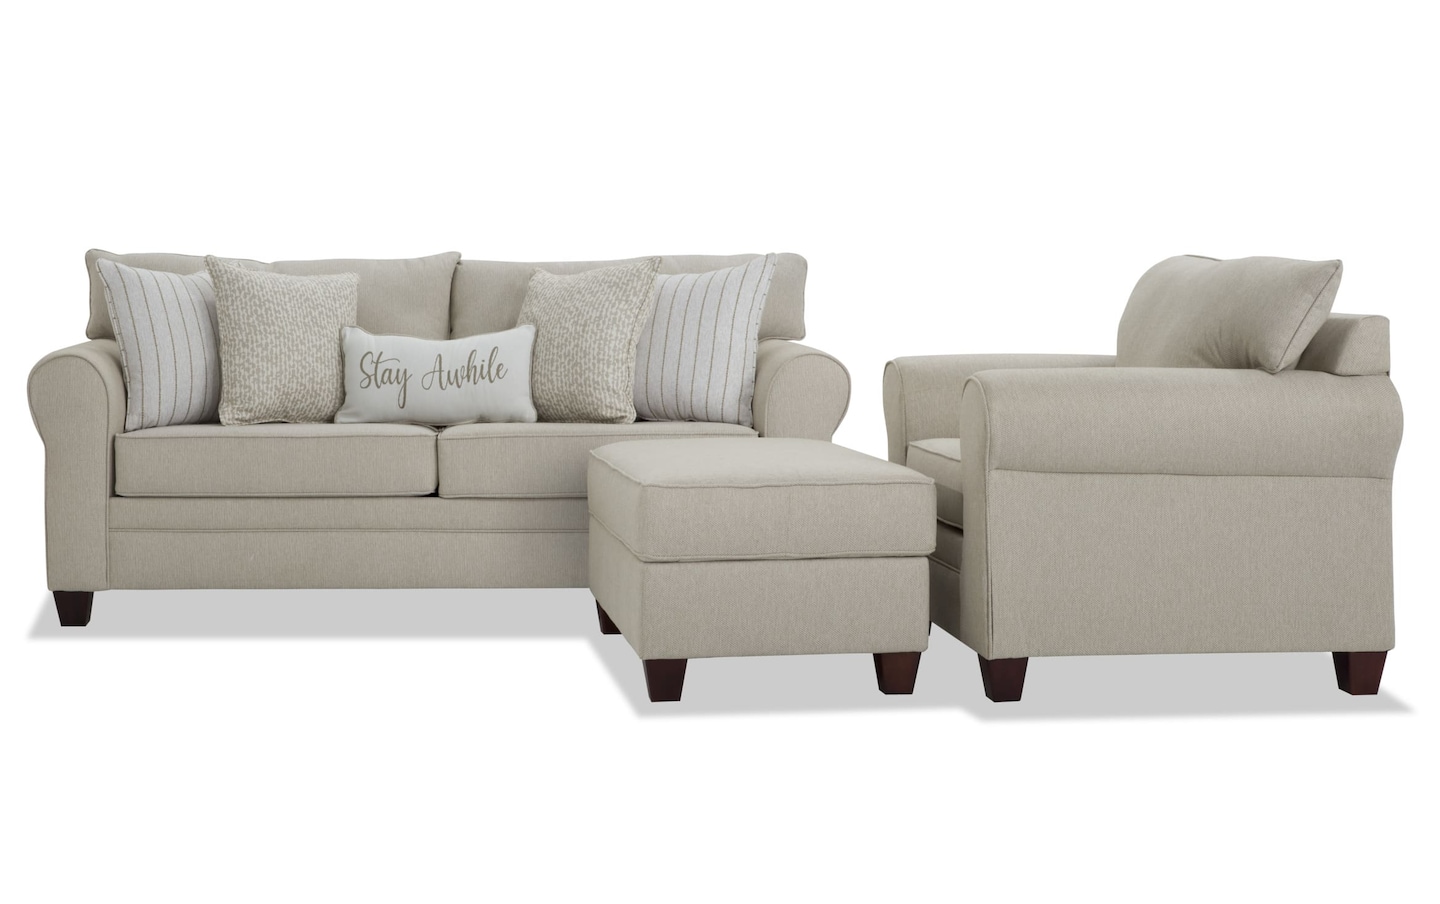 laurel beige sofa, chair,& storage ottoman | beige_color